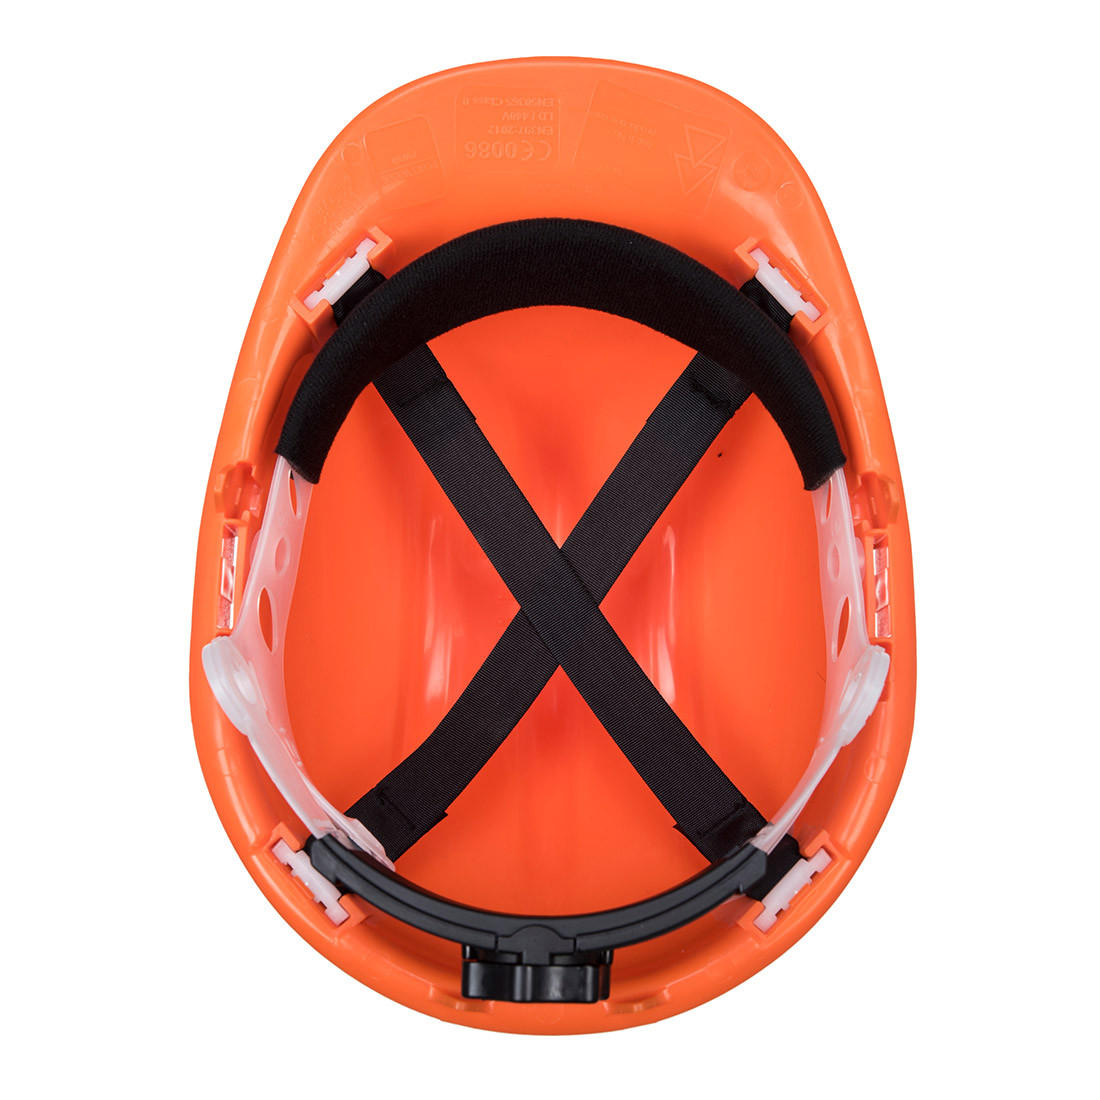 Casca Protectie Expertbase Wheel - Echipamente de protectie personala